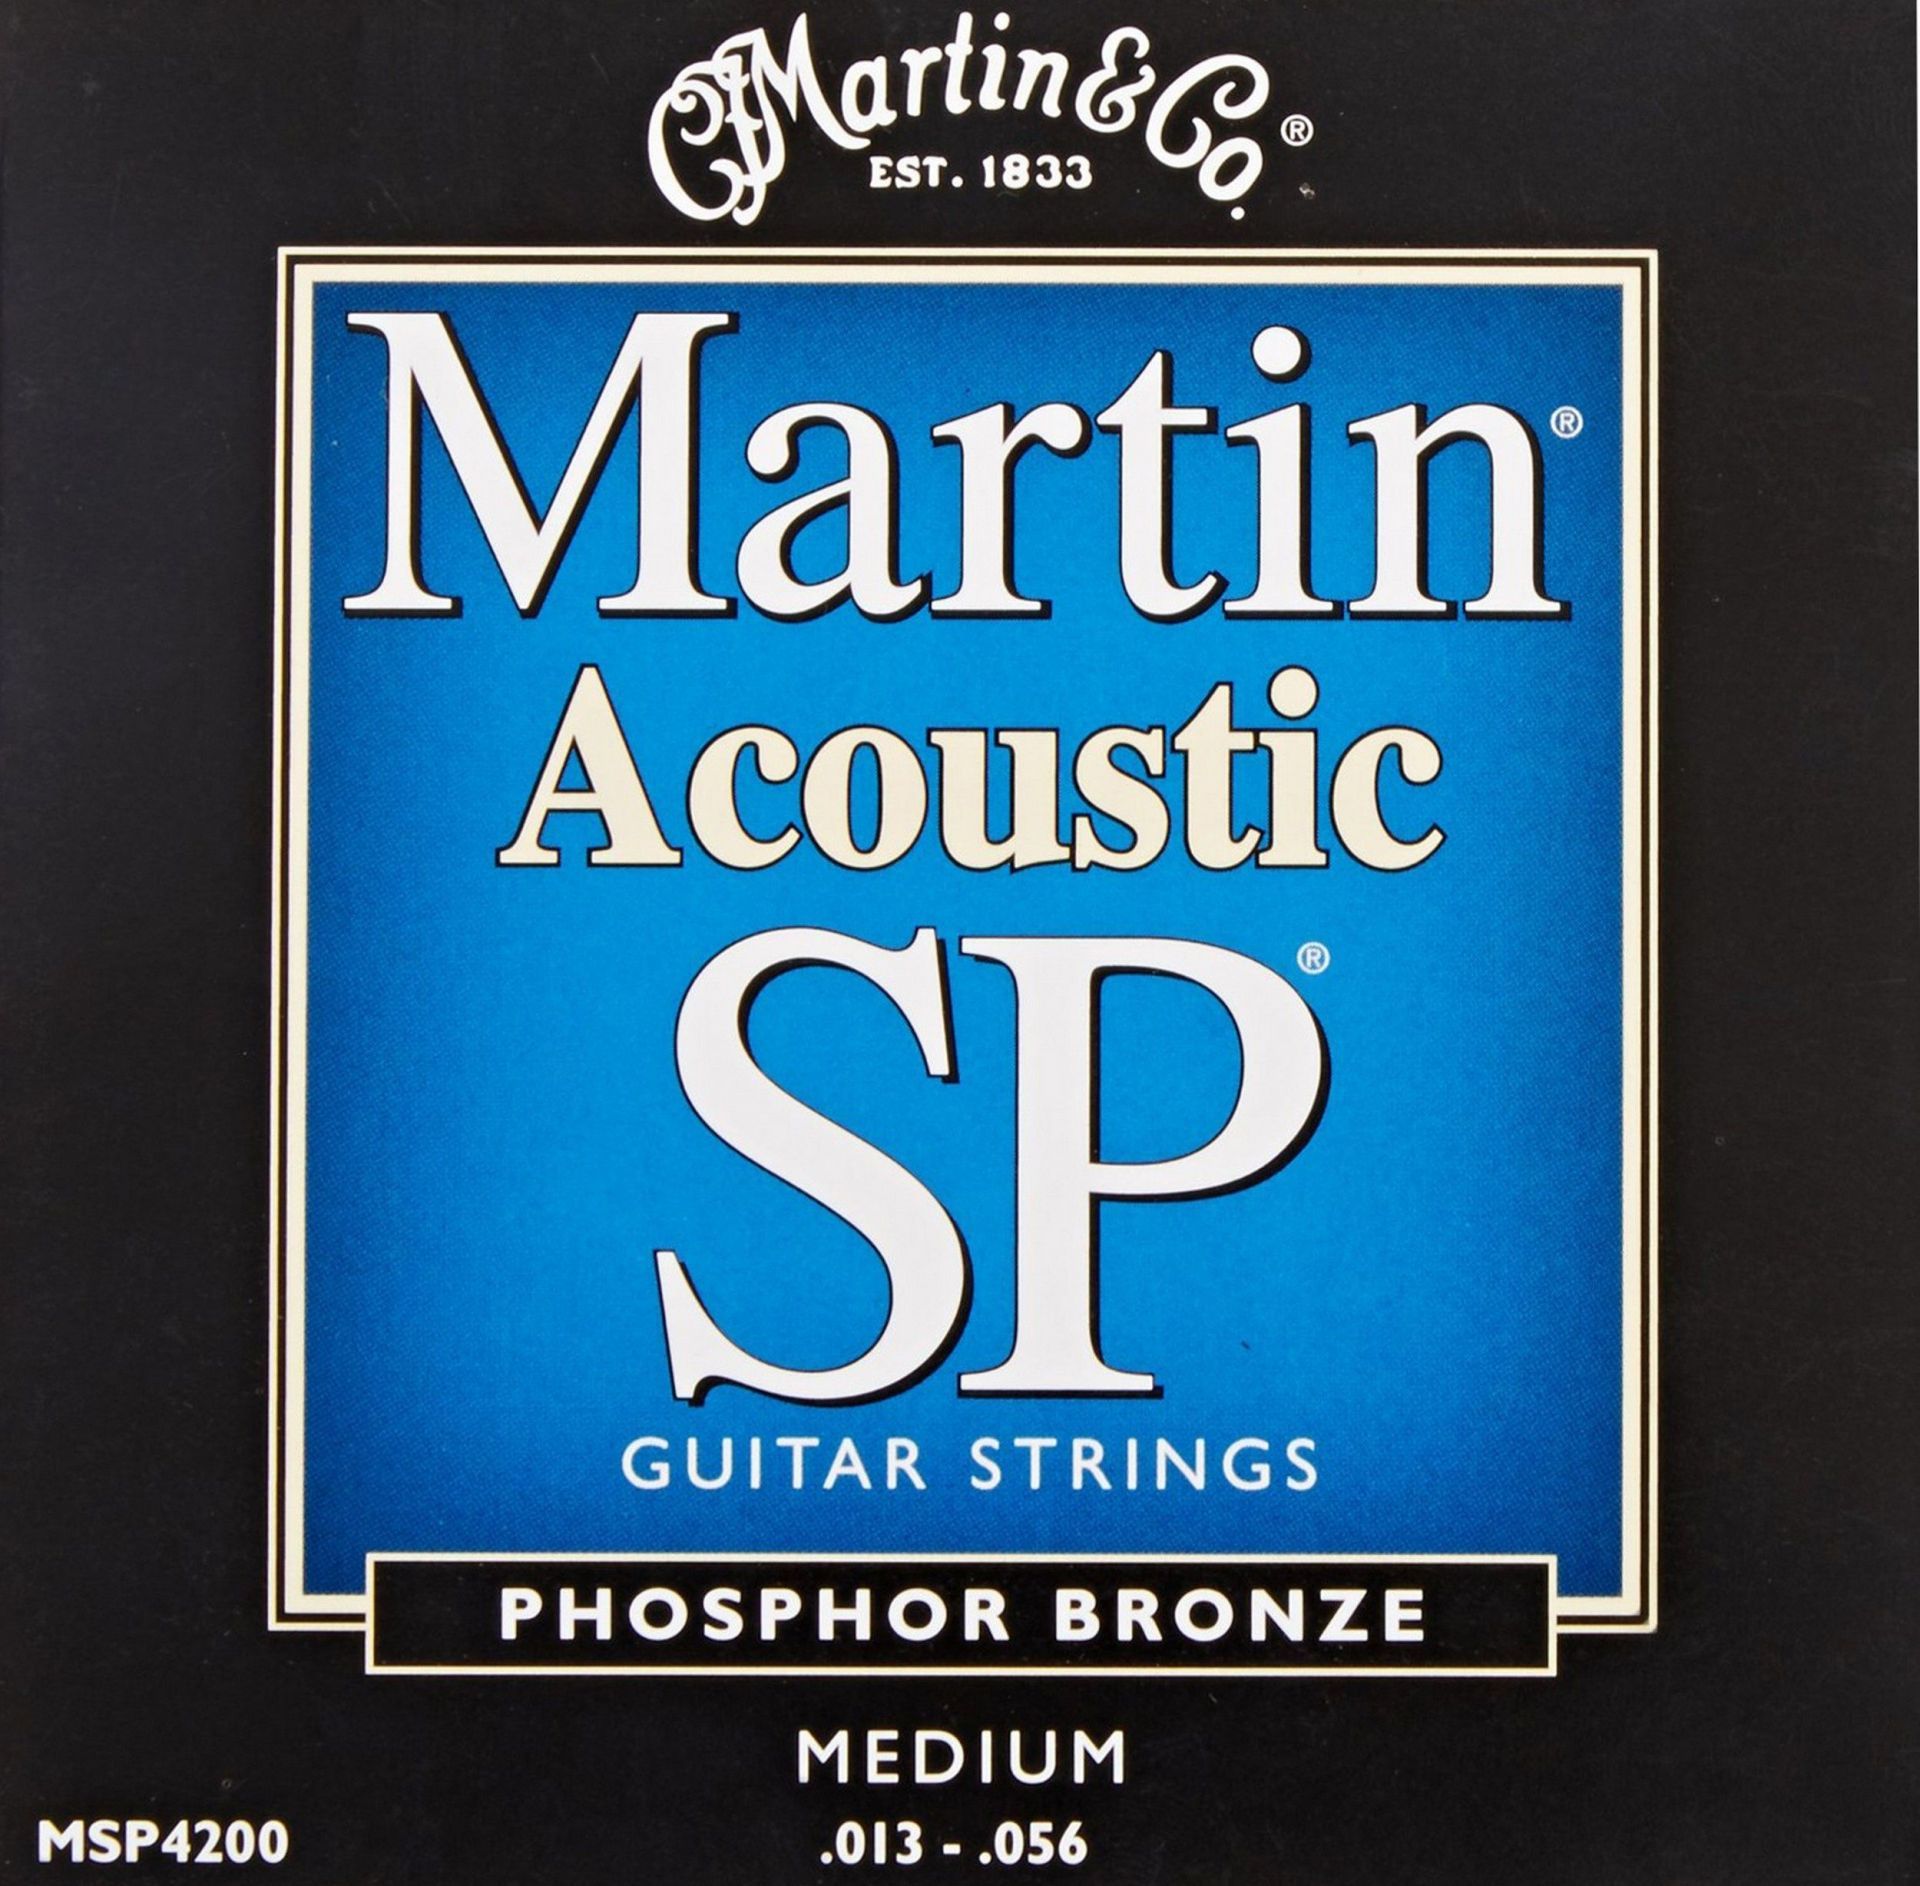 Martin & Co Phosphor Bronze MSP 4200